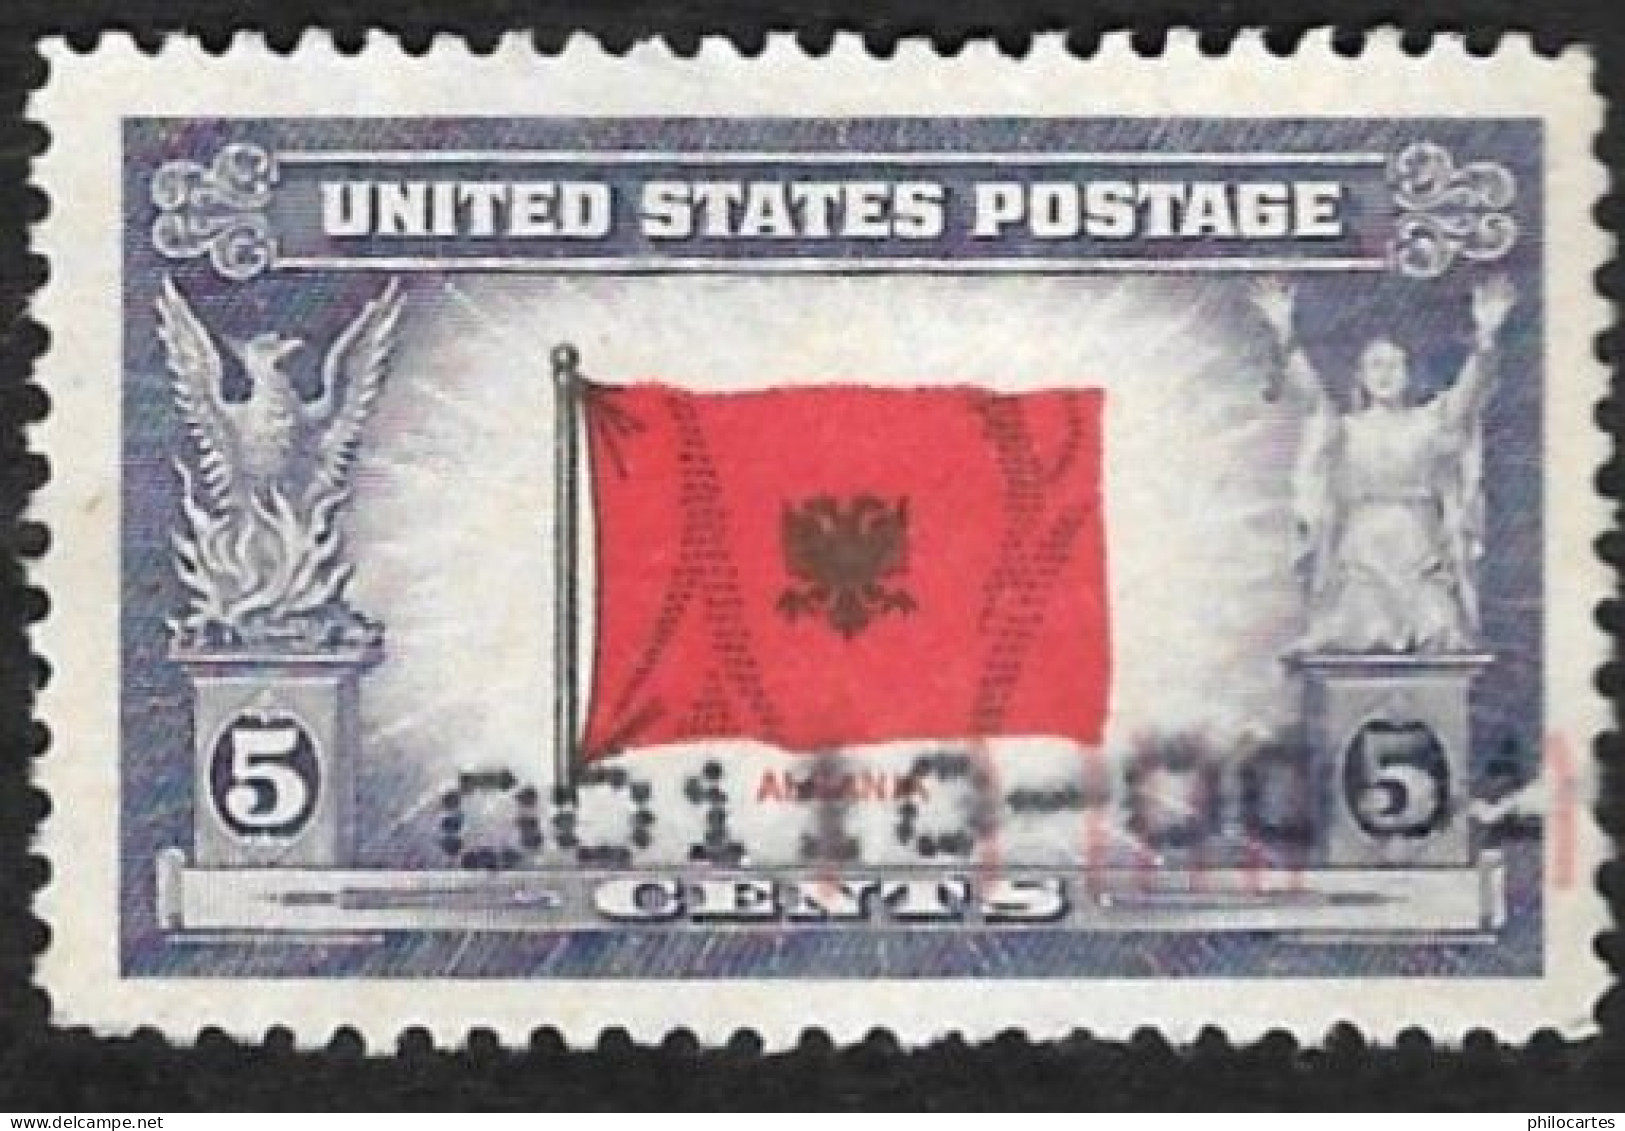 ETATS UNIS  1943 -  YT  459 - Drapeau Albanie - Flag Albania  - Oblitéré - Used Stamps